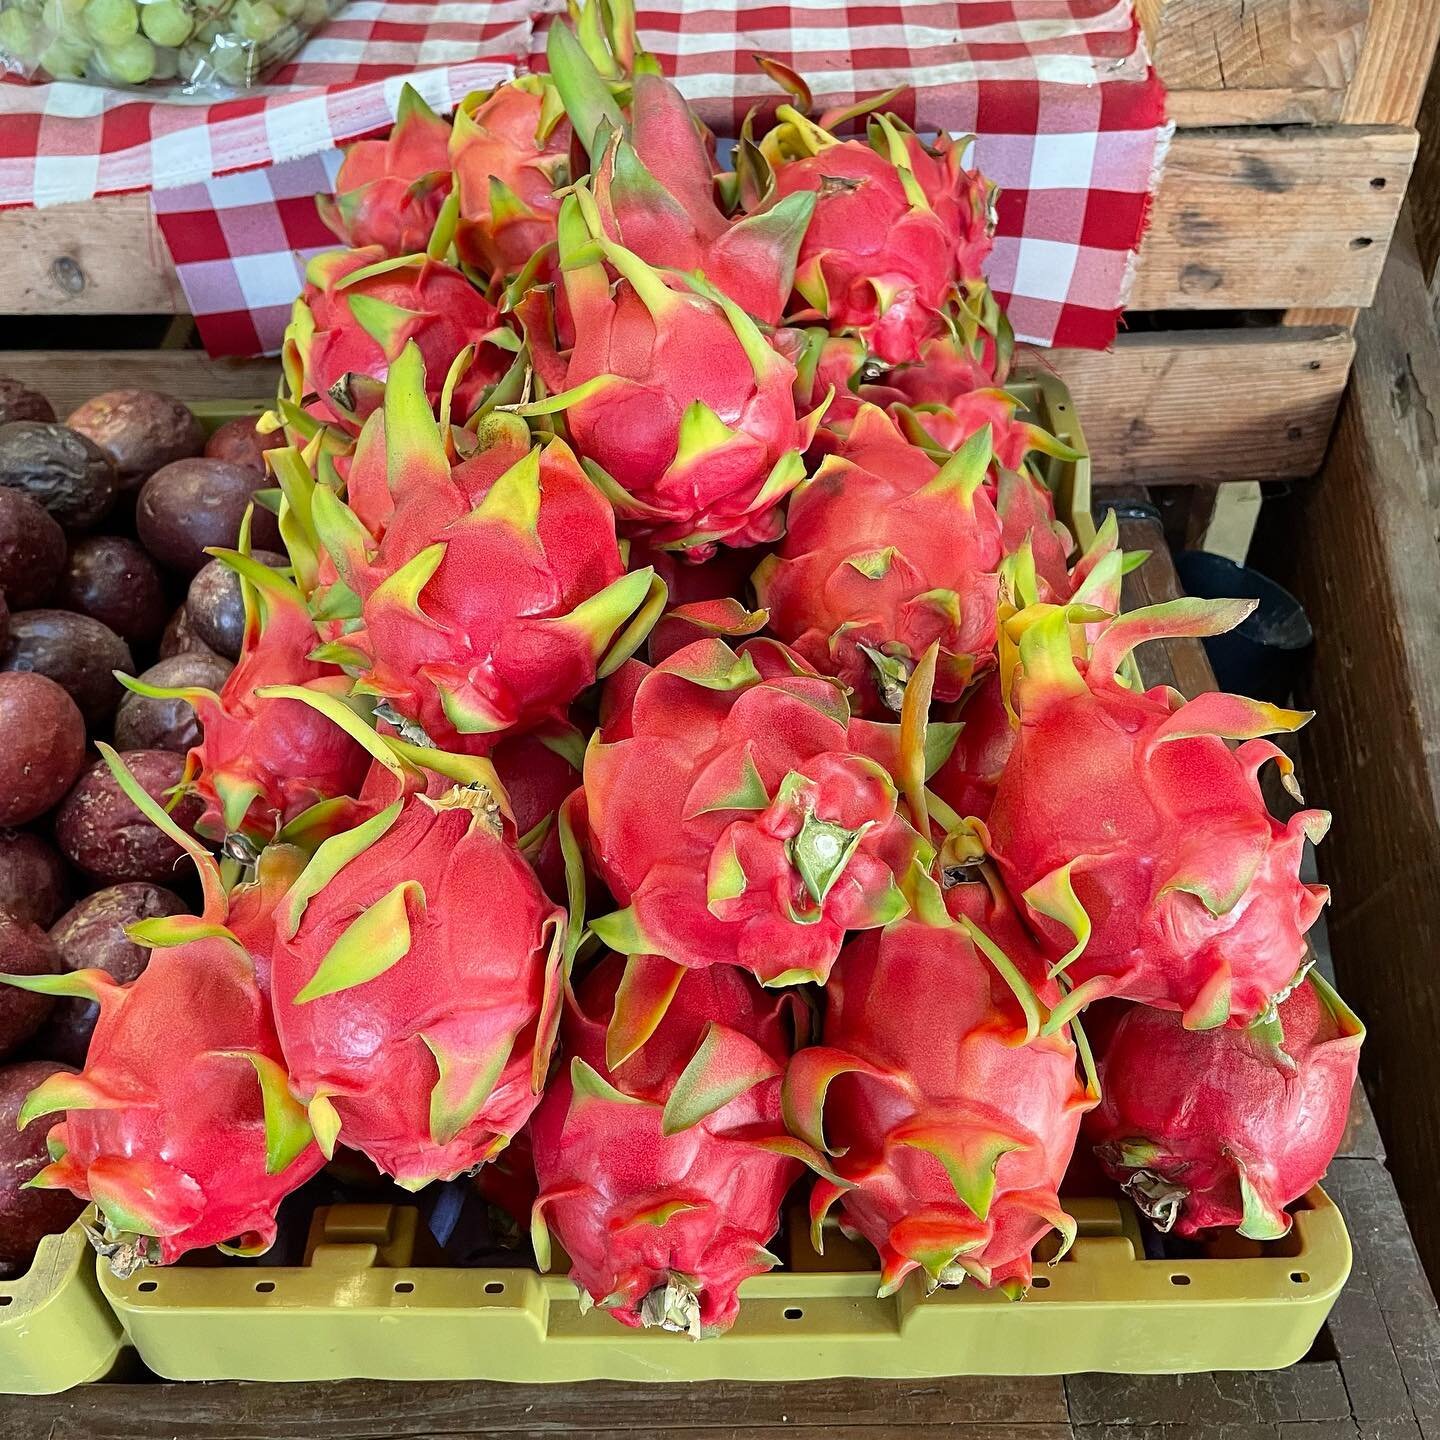 Dragon fruit &amp; passion fruit available at Rodela Produce ‼️🐉
.
.
.
.
.
#dragonfruit #passion #passionfruit #ventura #farmersmarket #produce #ventruacounty #fruit #fruitstand #fresh